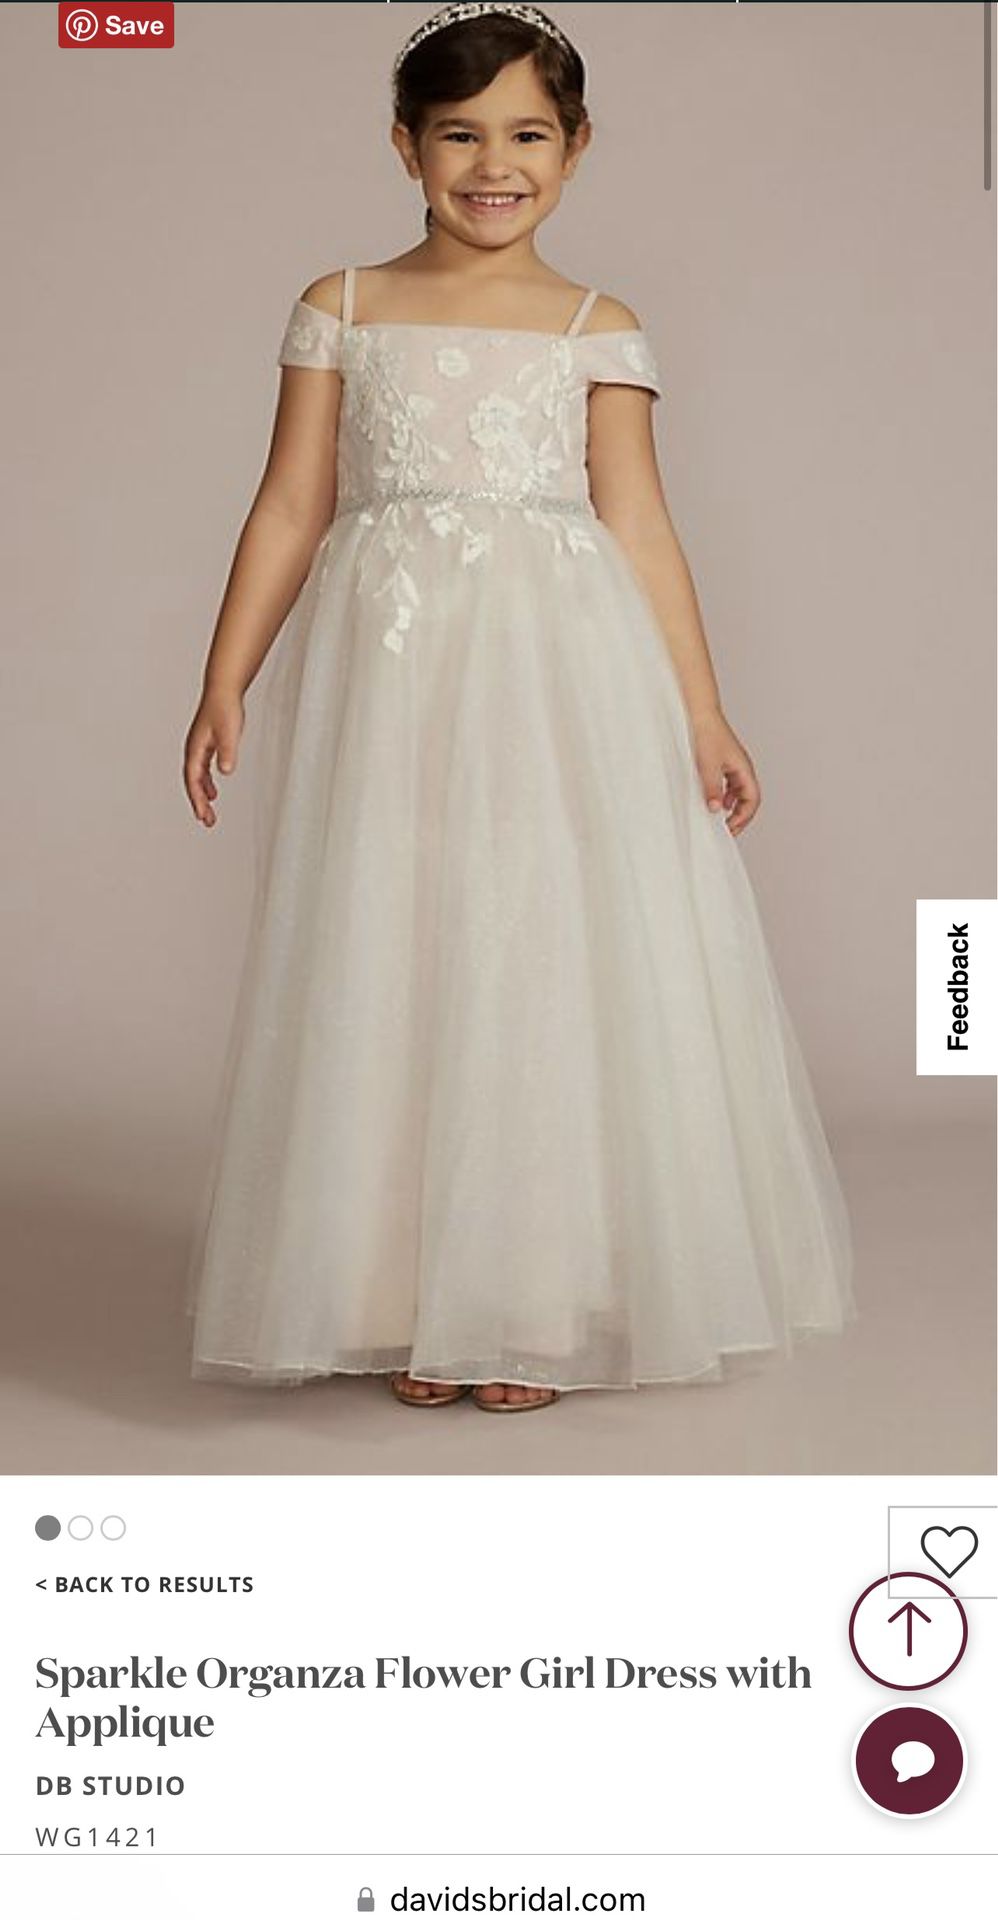  David's Bridal Sparkle Organza Flower Girl Dress with Applique Size 12